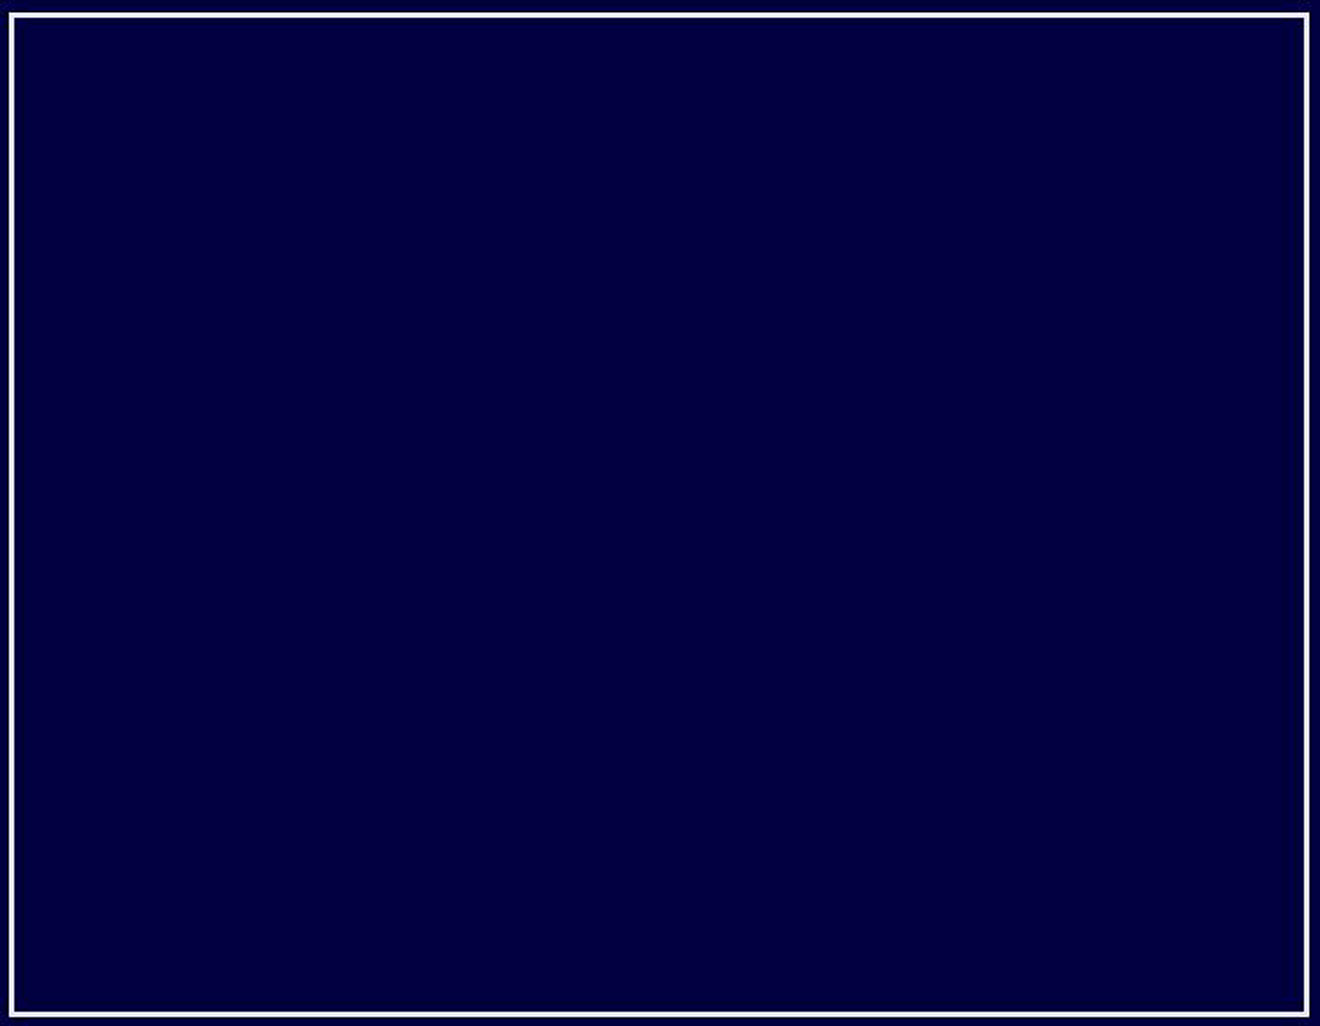 Eclipse 9999 - F96-Title - Blank Slide